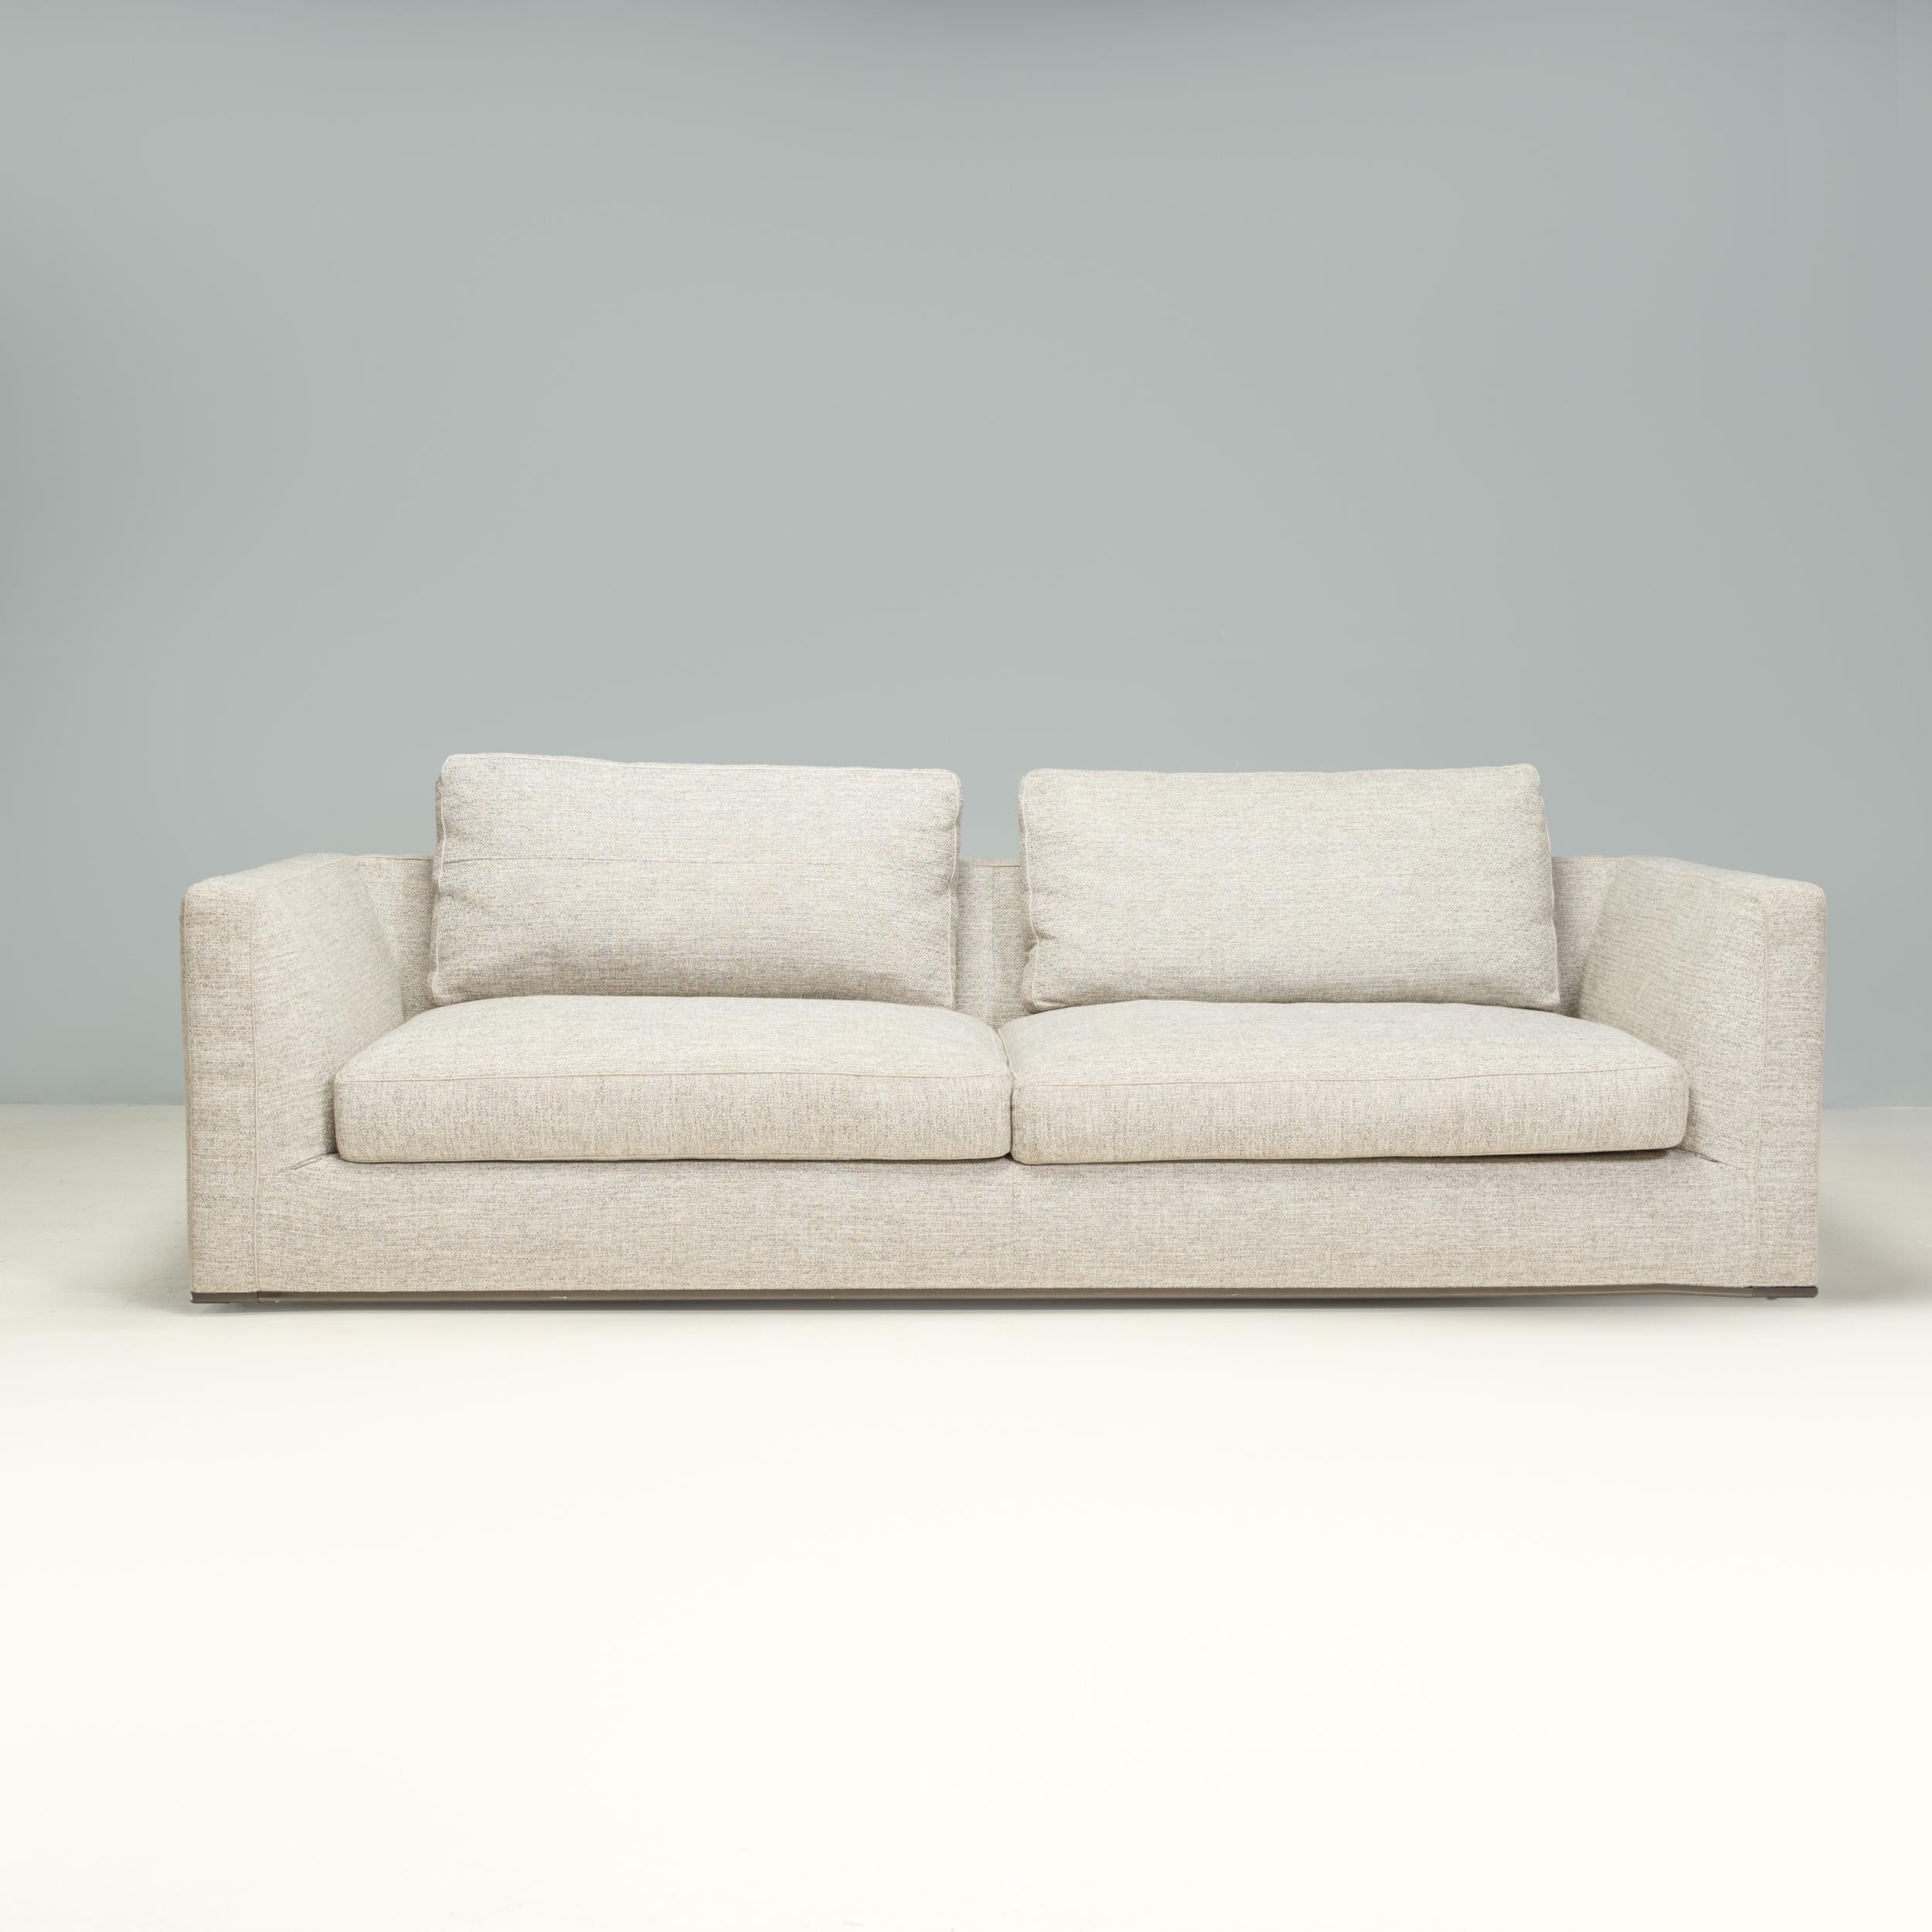 B&B Italia by Antonio Citterio Richard Grey Fabric Corner Sofa In Good Condition For Sale In London, GB